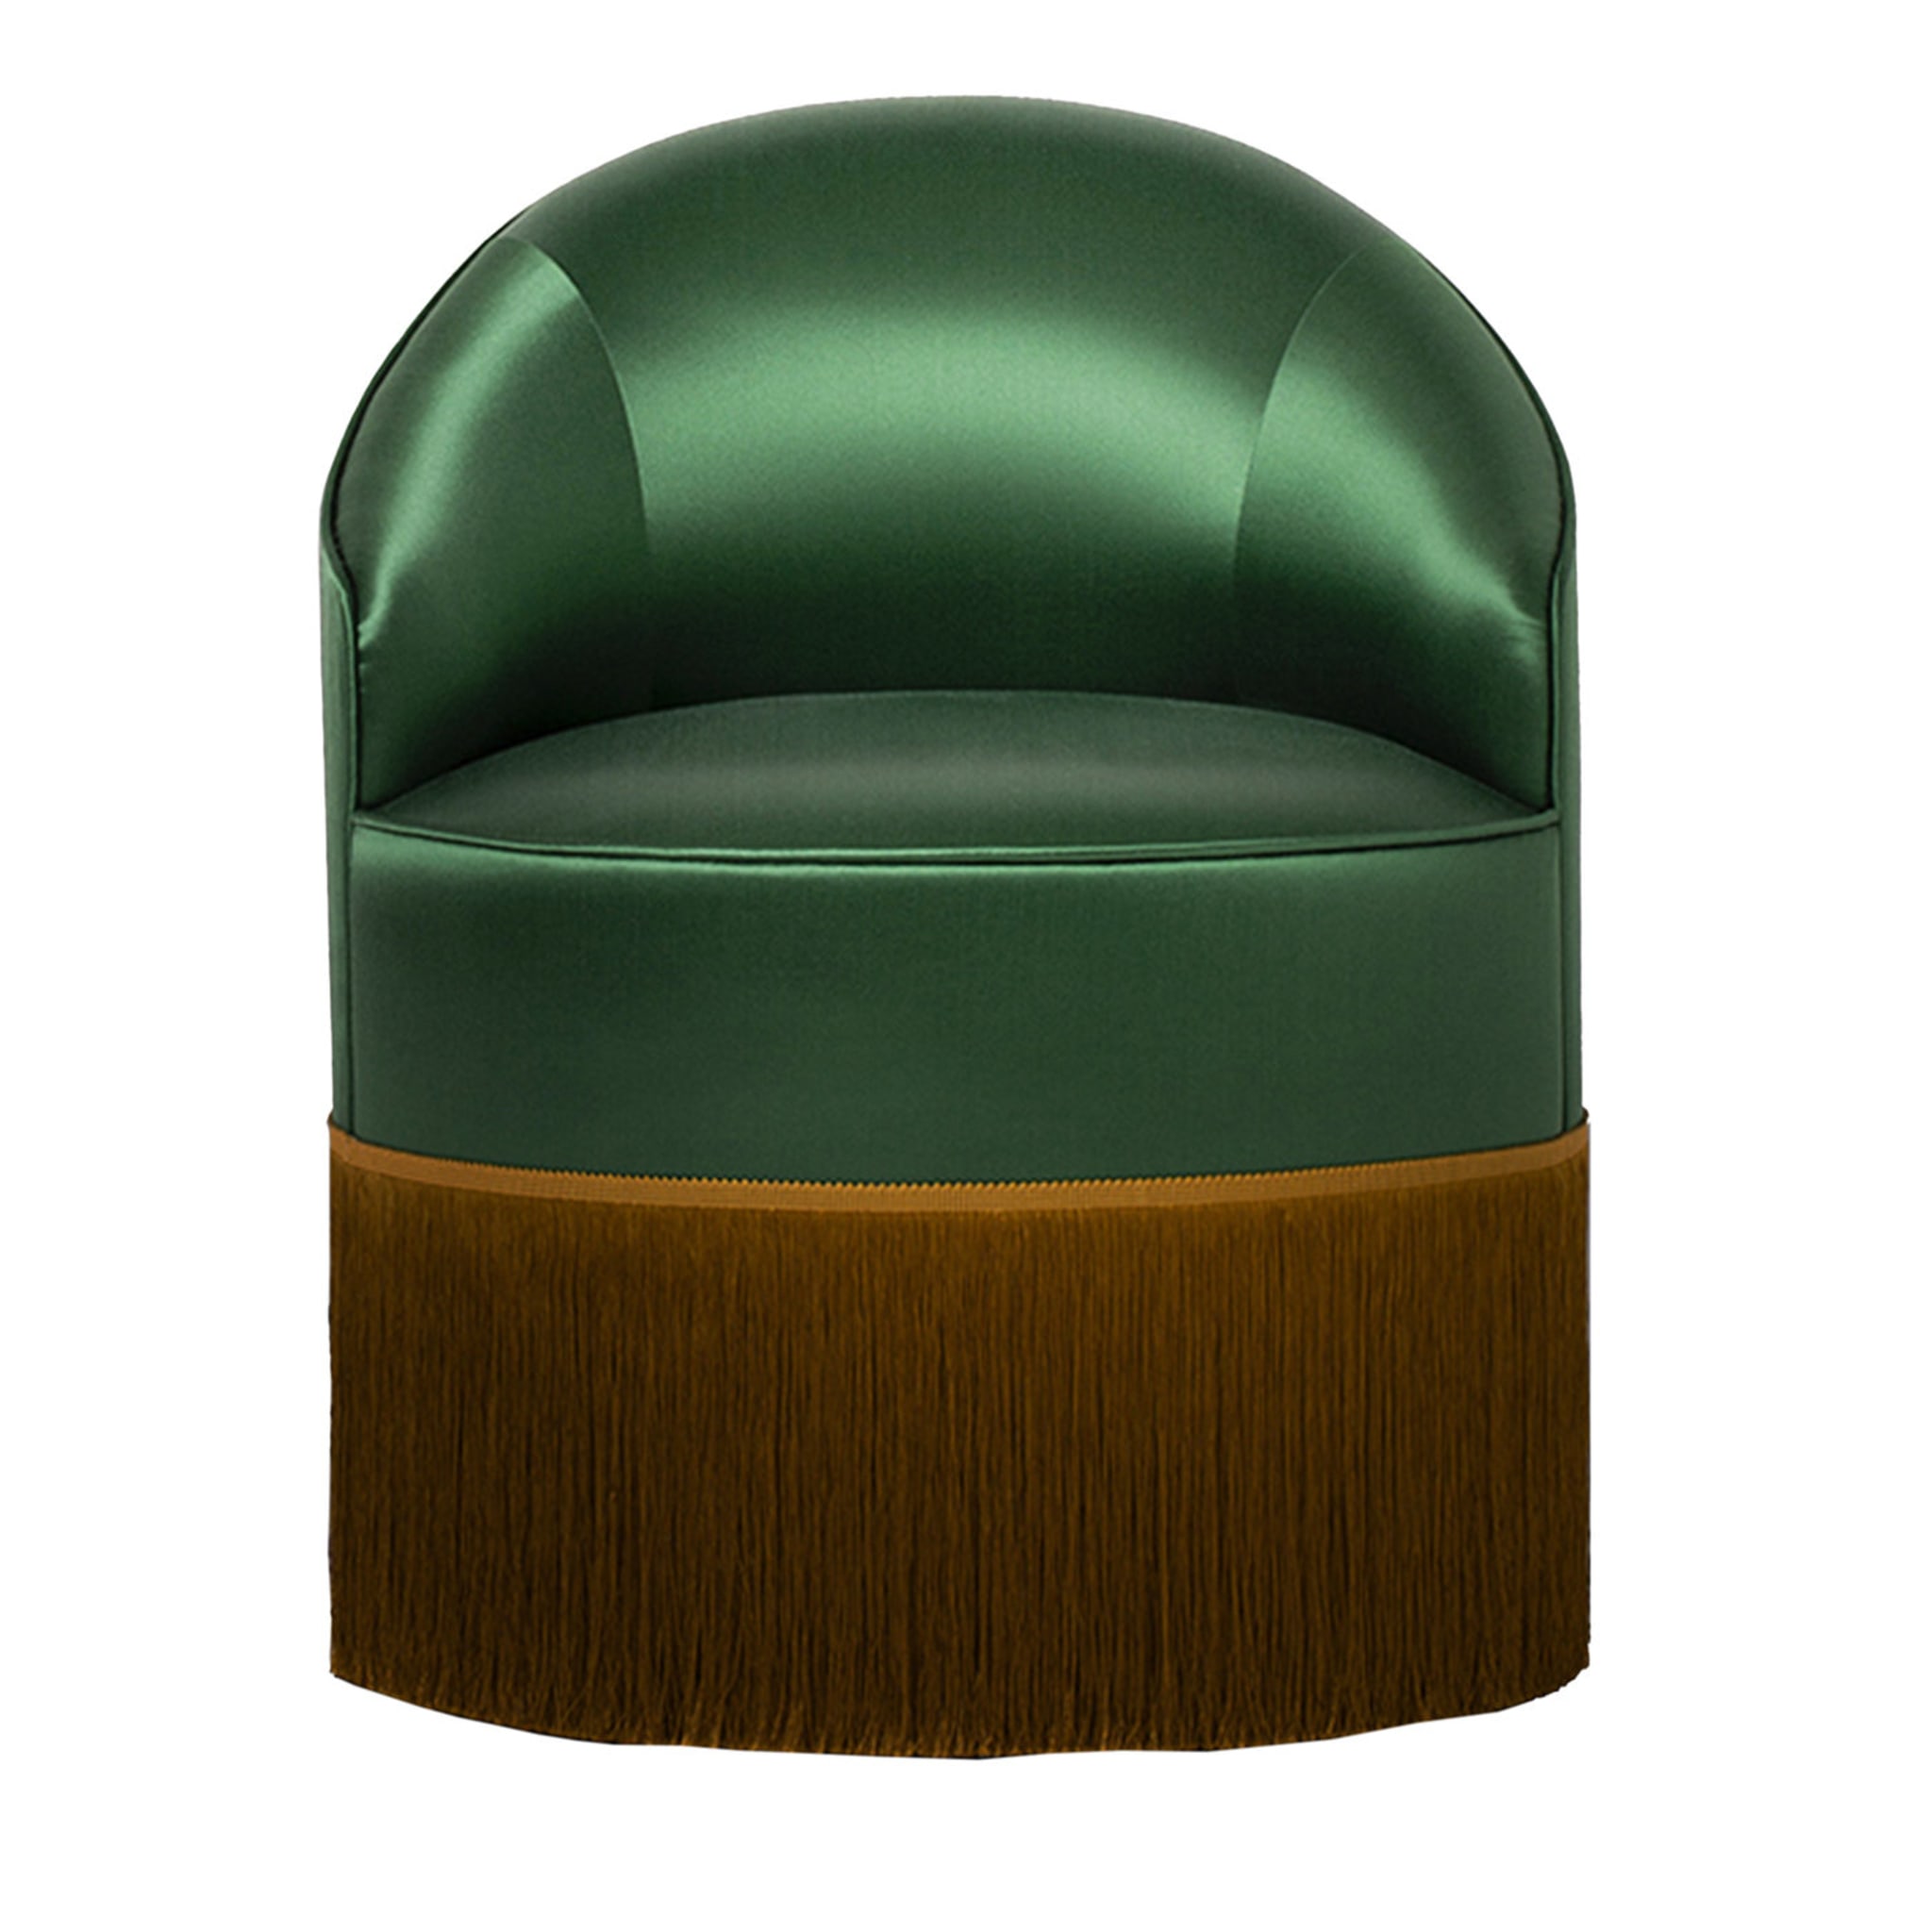 Sciura Green Armchair by Dimoremilano - Main view